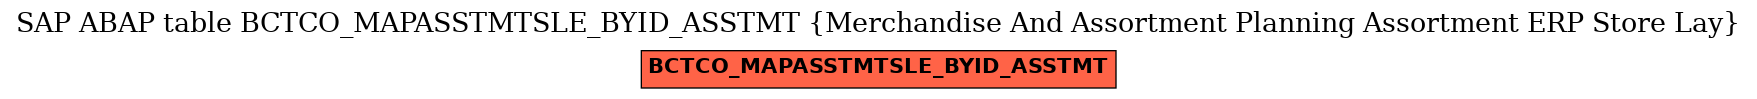 E-R Diagram for table BCTCO_MAPASSTMTSLE_BYID_ASSTMT (Merchandise And Assortment Planning Assortment ERP Store Lay)